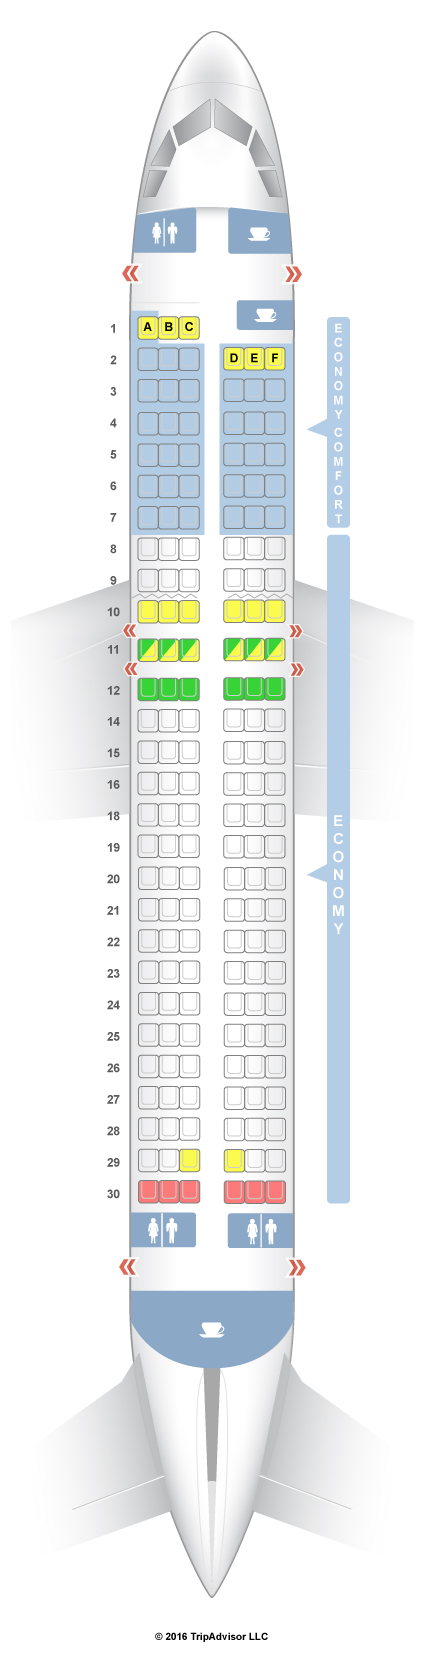 Alitalia Flight Seating Chart